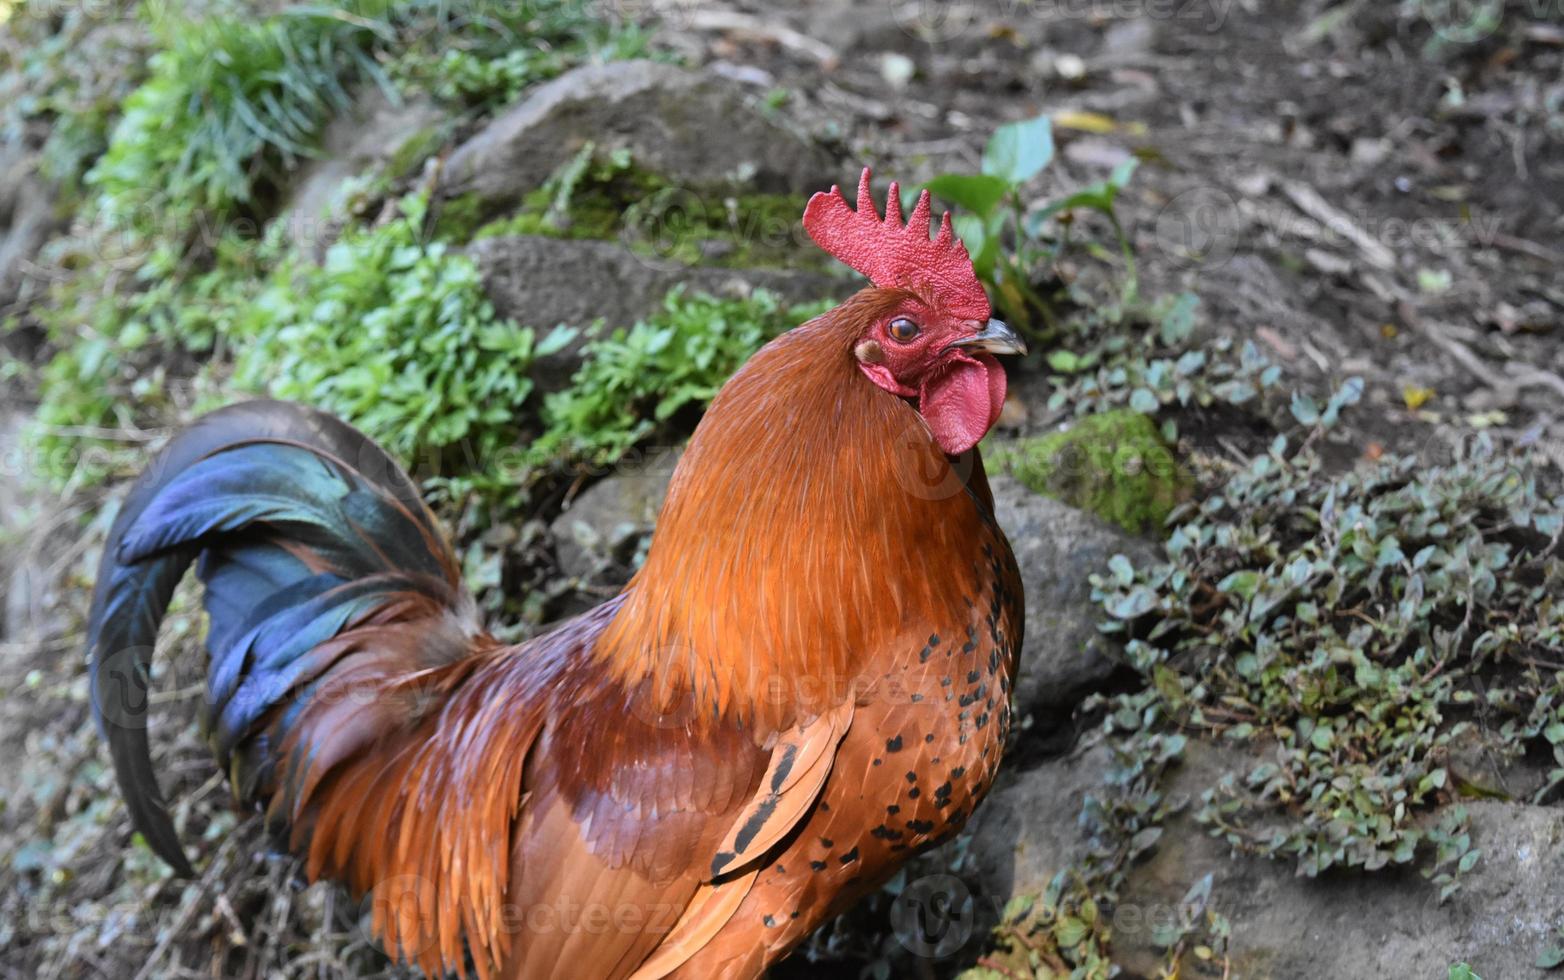 mire de cerca a un gallo de cresta roja en la naturaleza foto